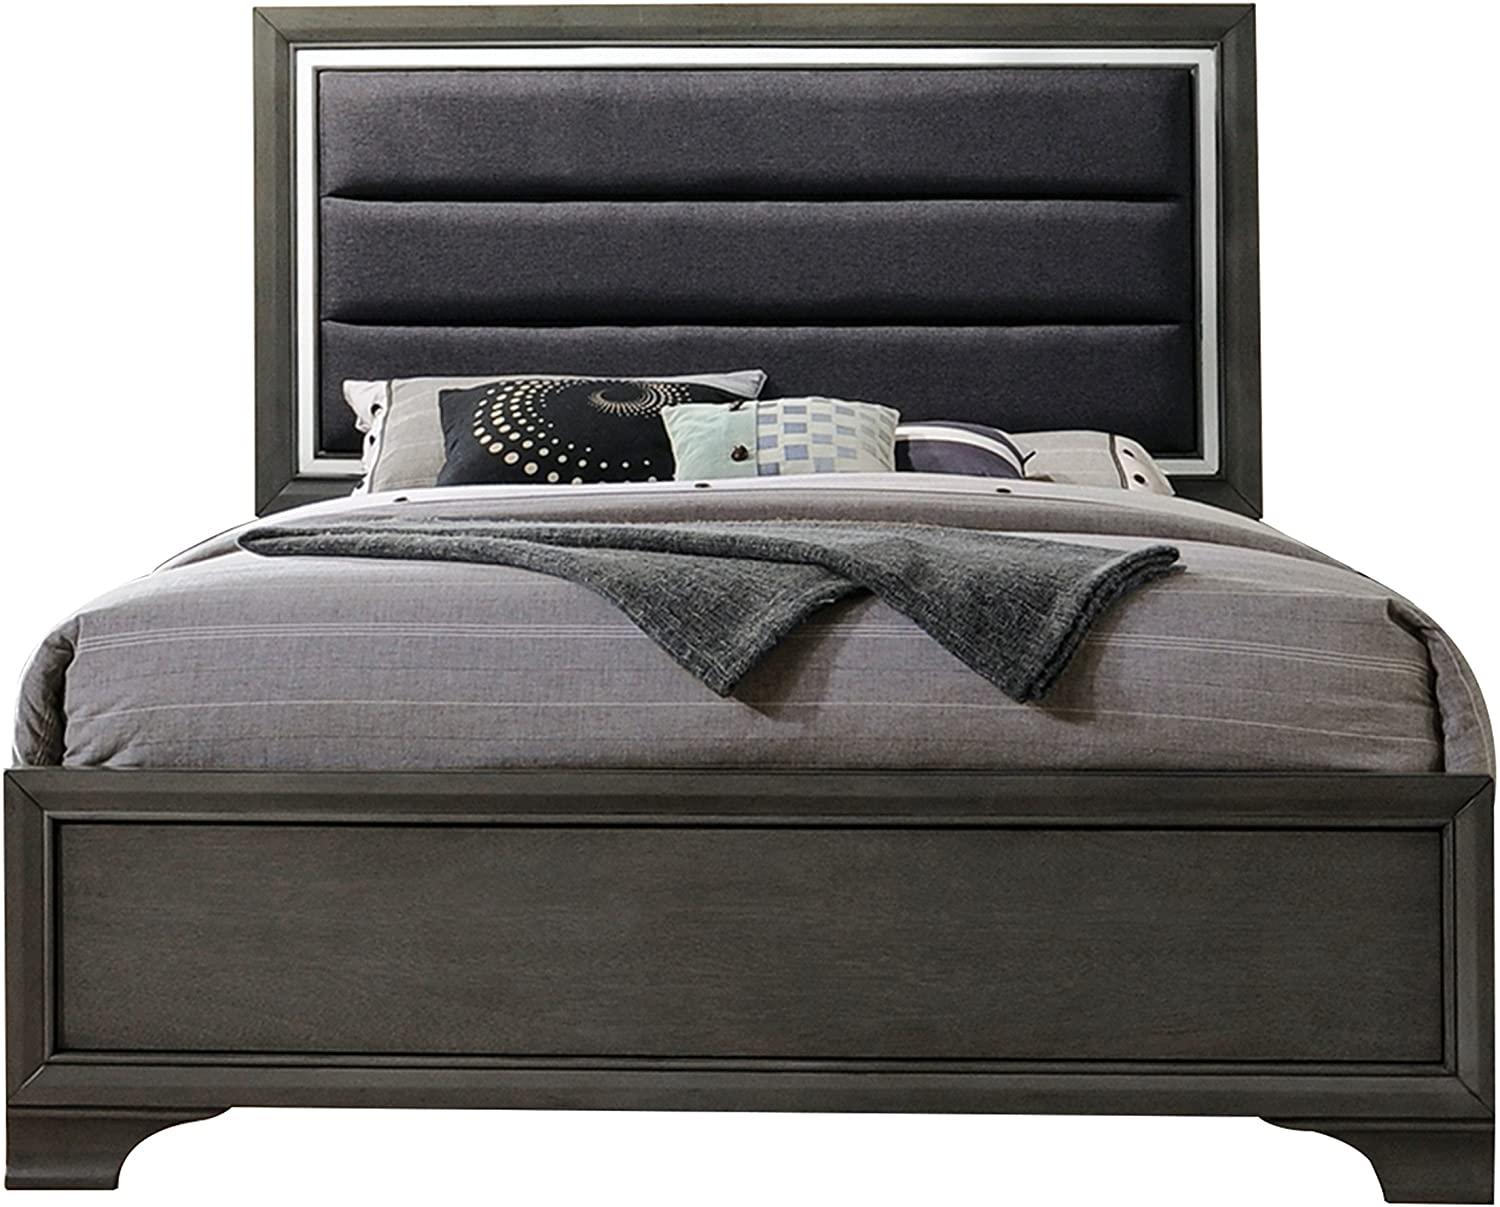 

    
Transitional Charcoal/Gray Finish Fabric King Bed Carine II-26257EK Acme
